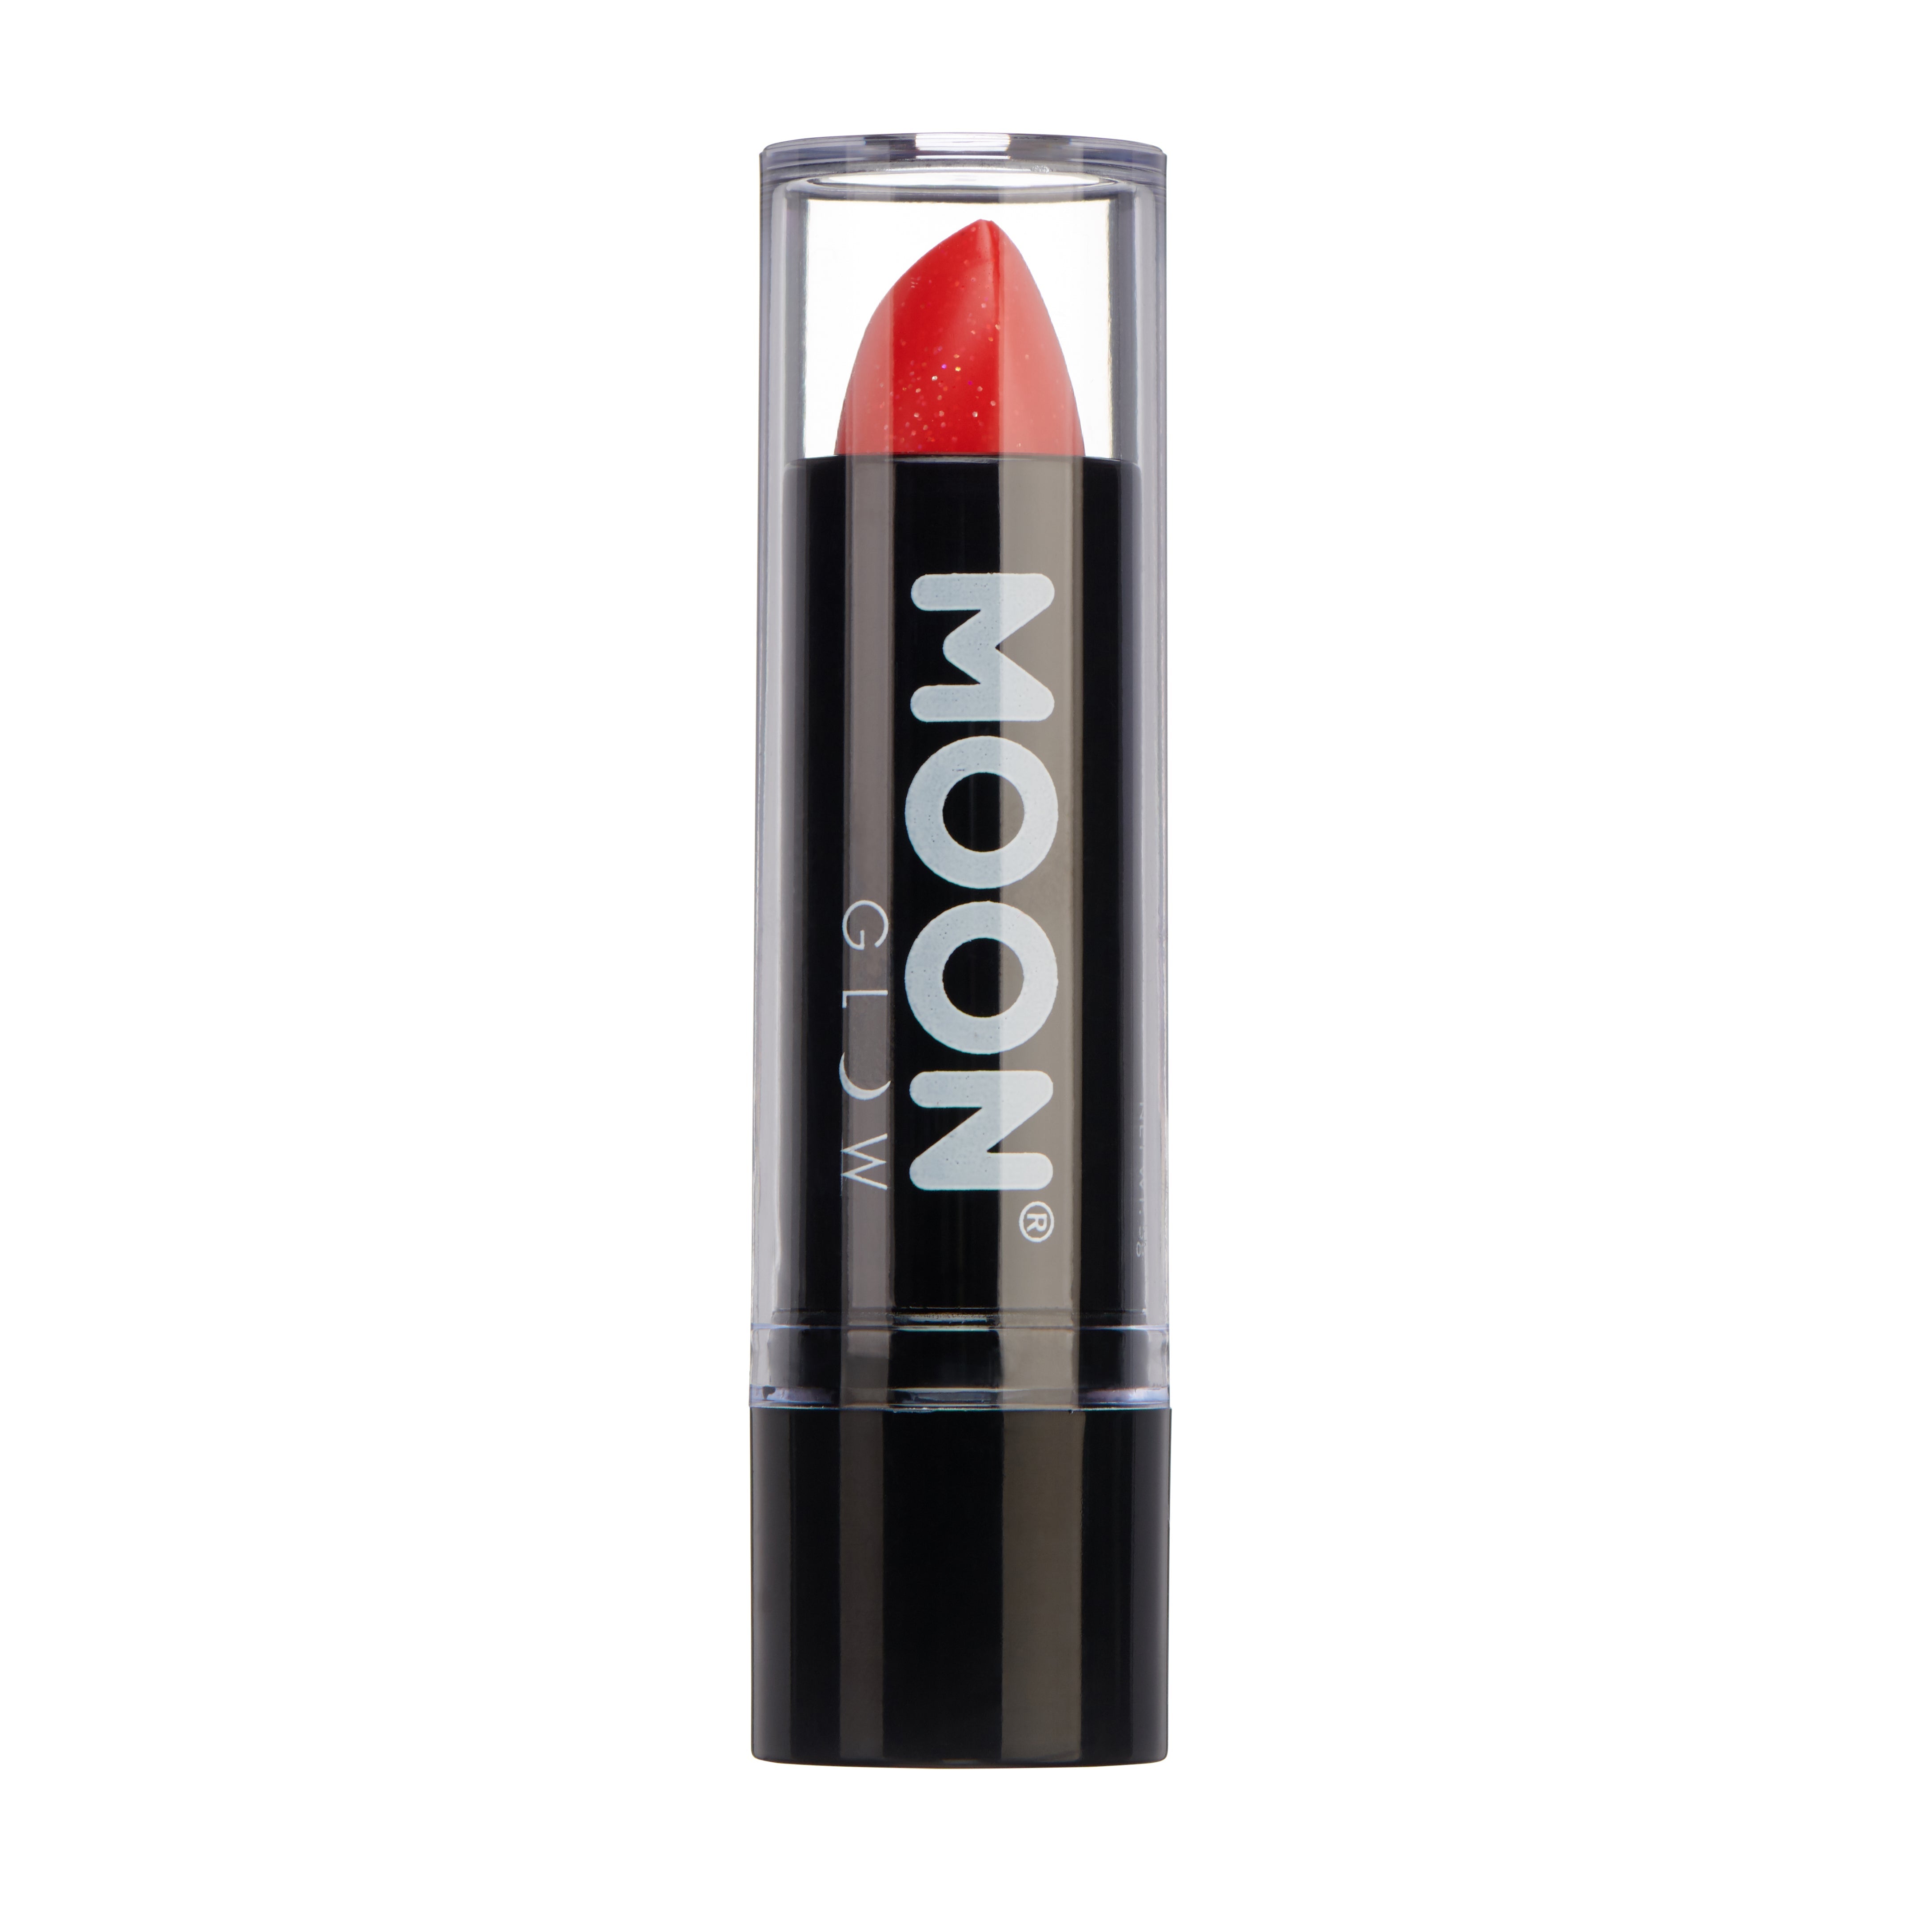 Red - Neon UV Glow Blacklight Glitter Lipstick, 5g. Cosmetically certified, FDA & Health Canada compliant and cruelty free.